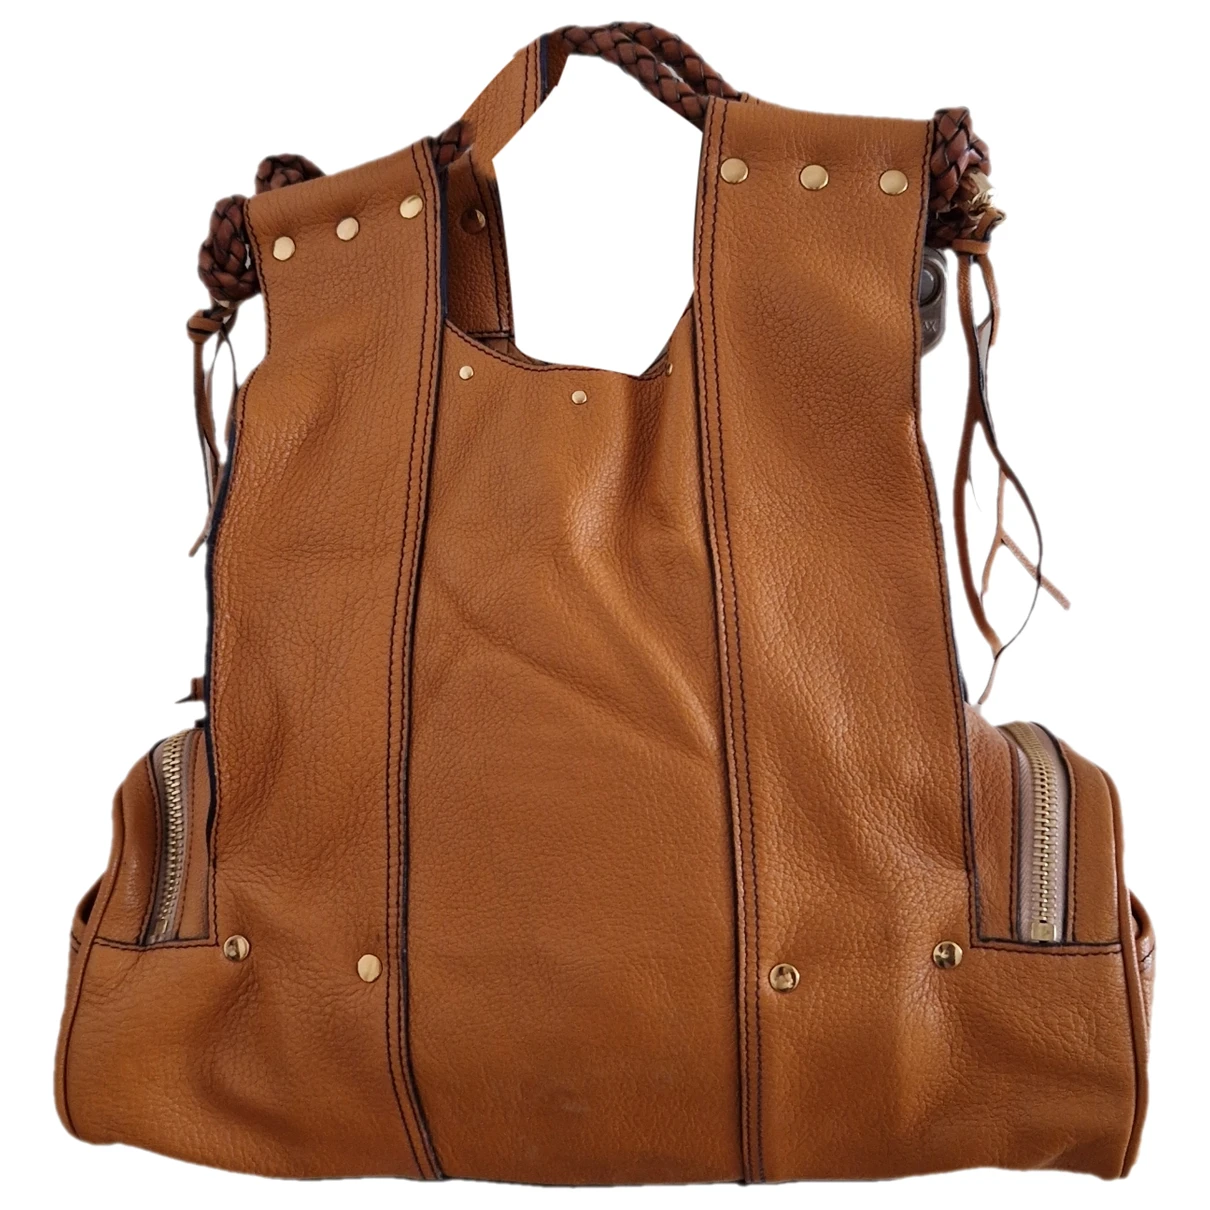 Pre-owned Corto Moltedo Leather Handbag In Camel